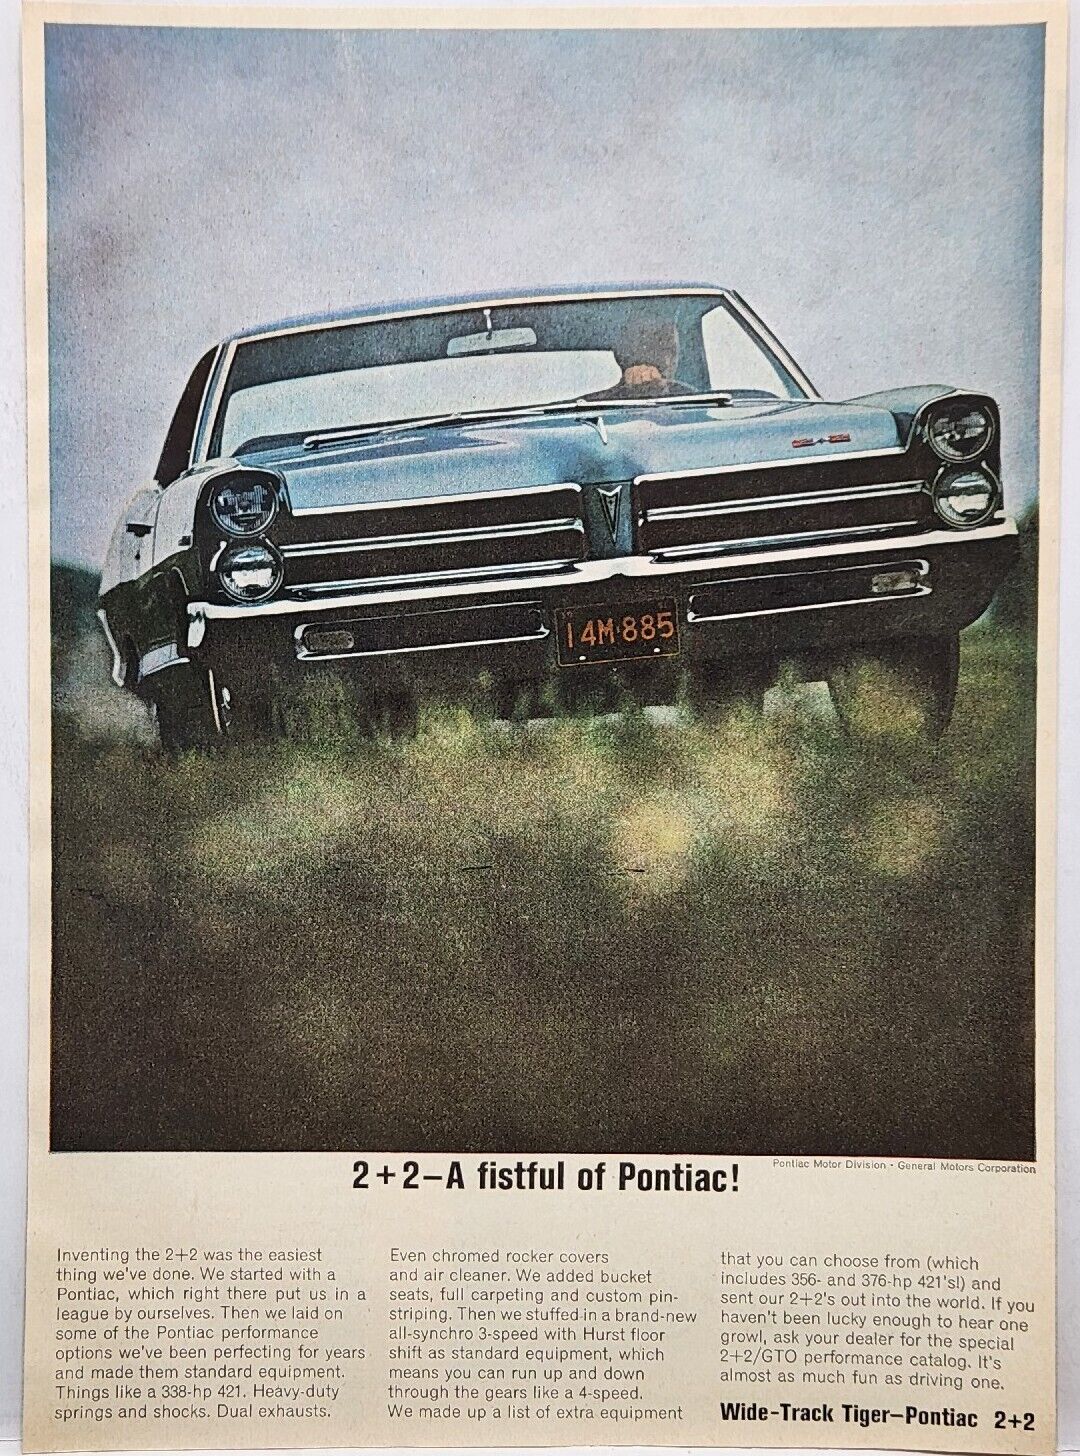 1965 Pontiac 2+2 Vintage General Motors Print Ad Fistful Of Pontiac